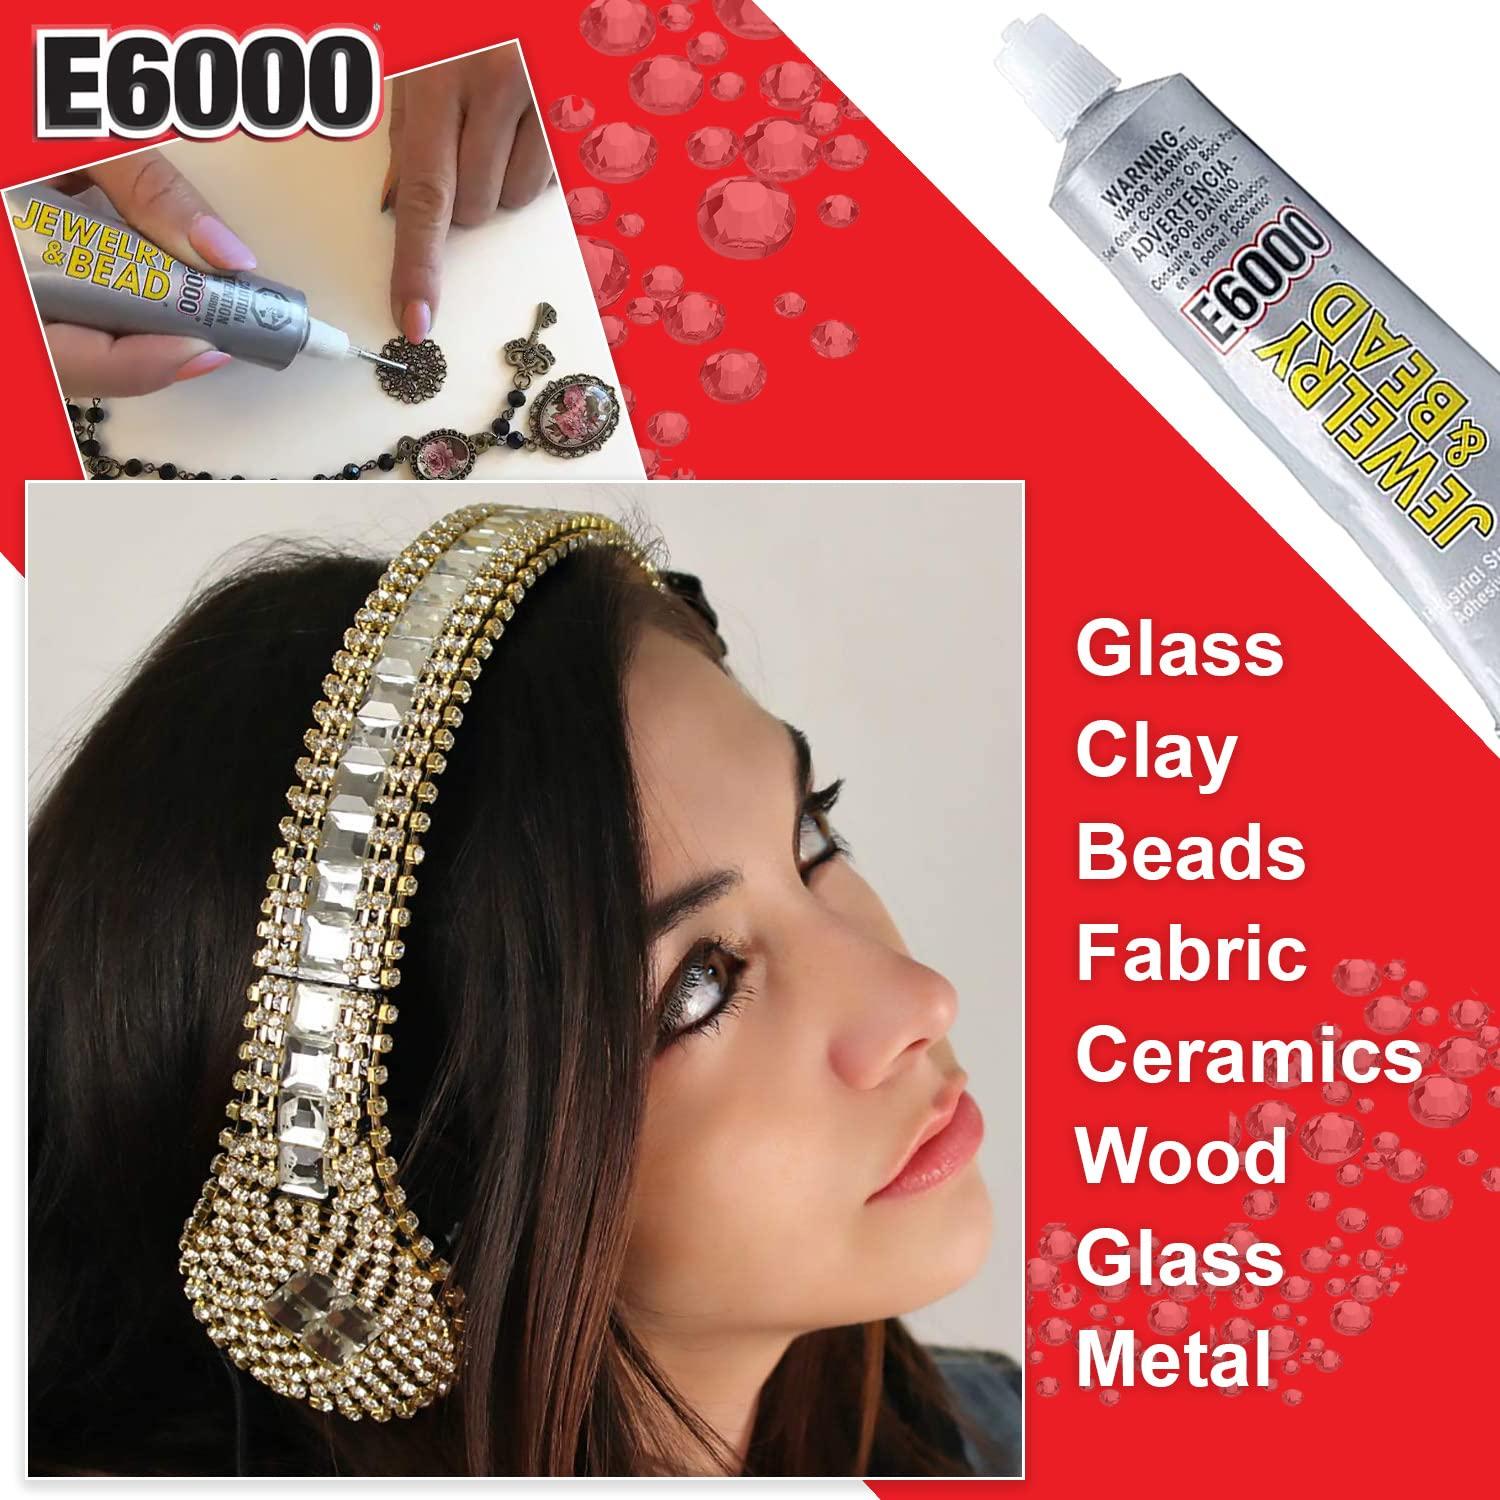 E6000 Jewelry Bead Adhesive Glue for Jewelry Making with 4 Precision  Applicator Tips and Pixiss Art Dotting Stylus Pens 5 pcs Set - Rhinestone  Applicator Kit